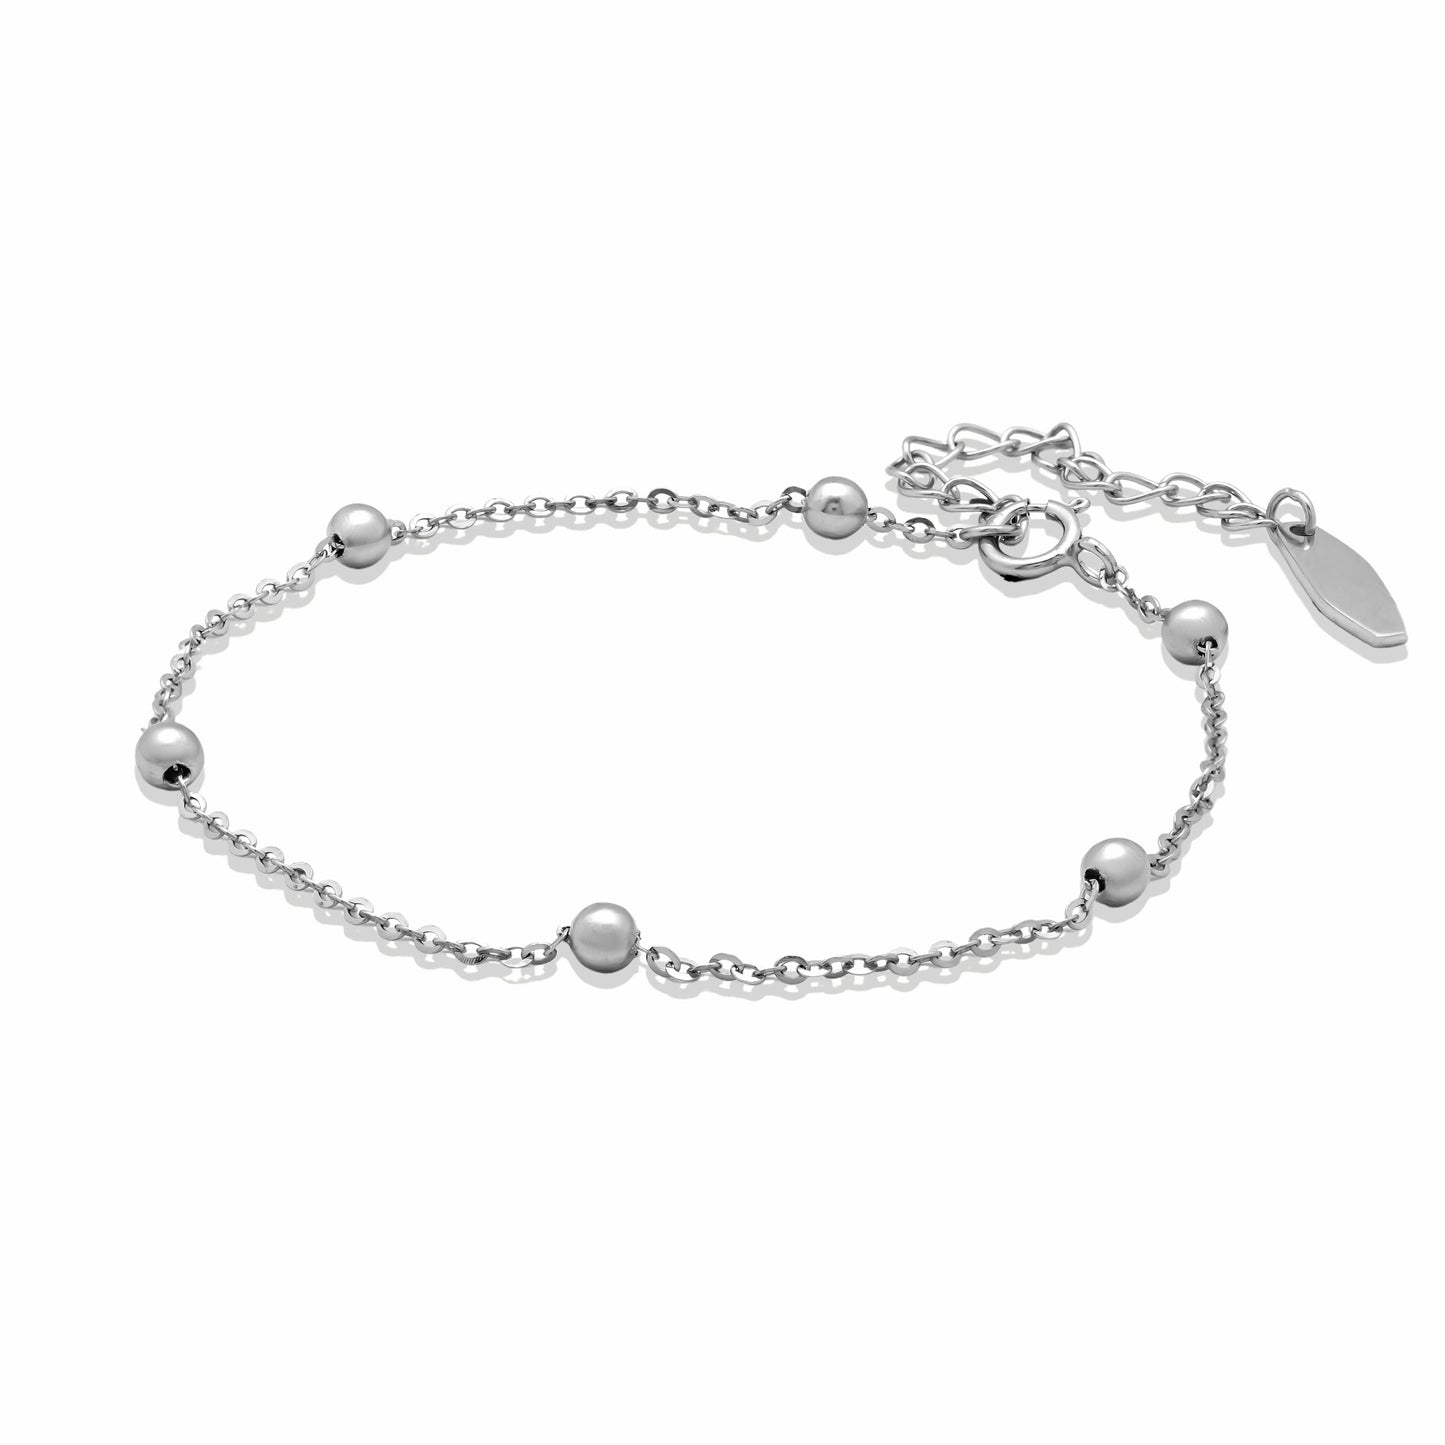 Bead Chain Silver Bracelet